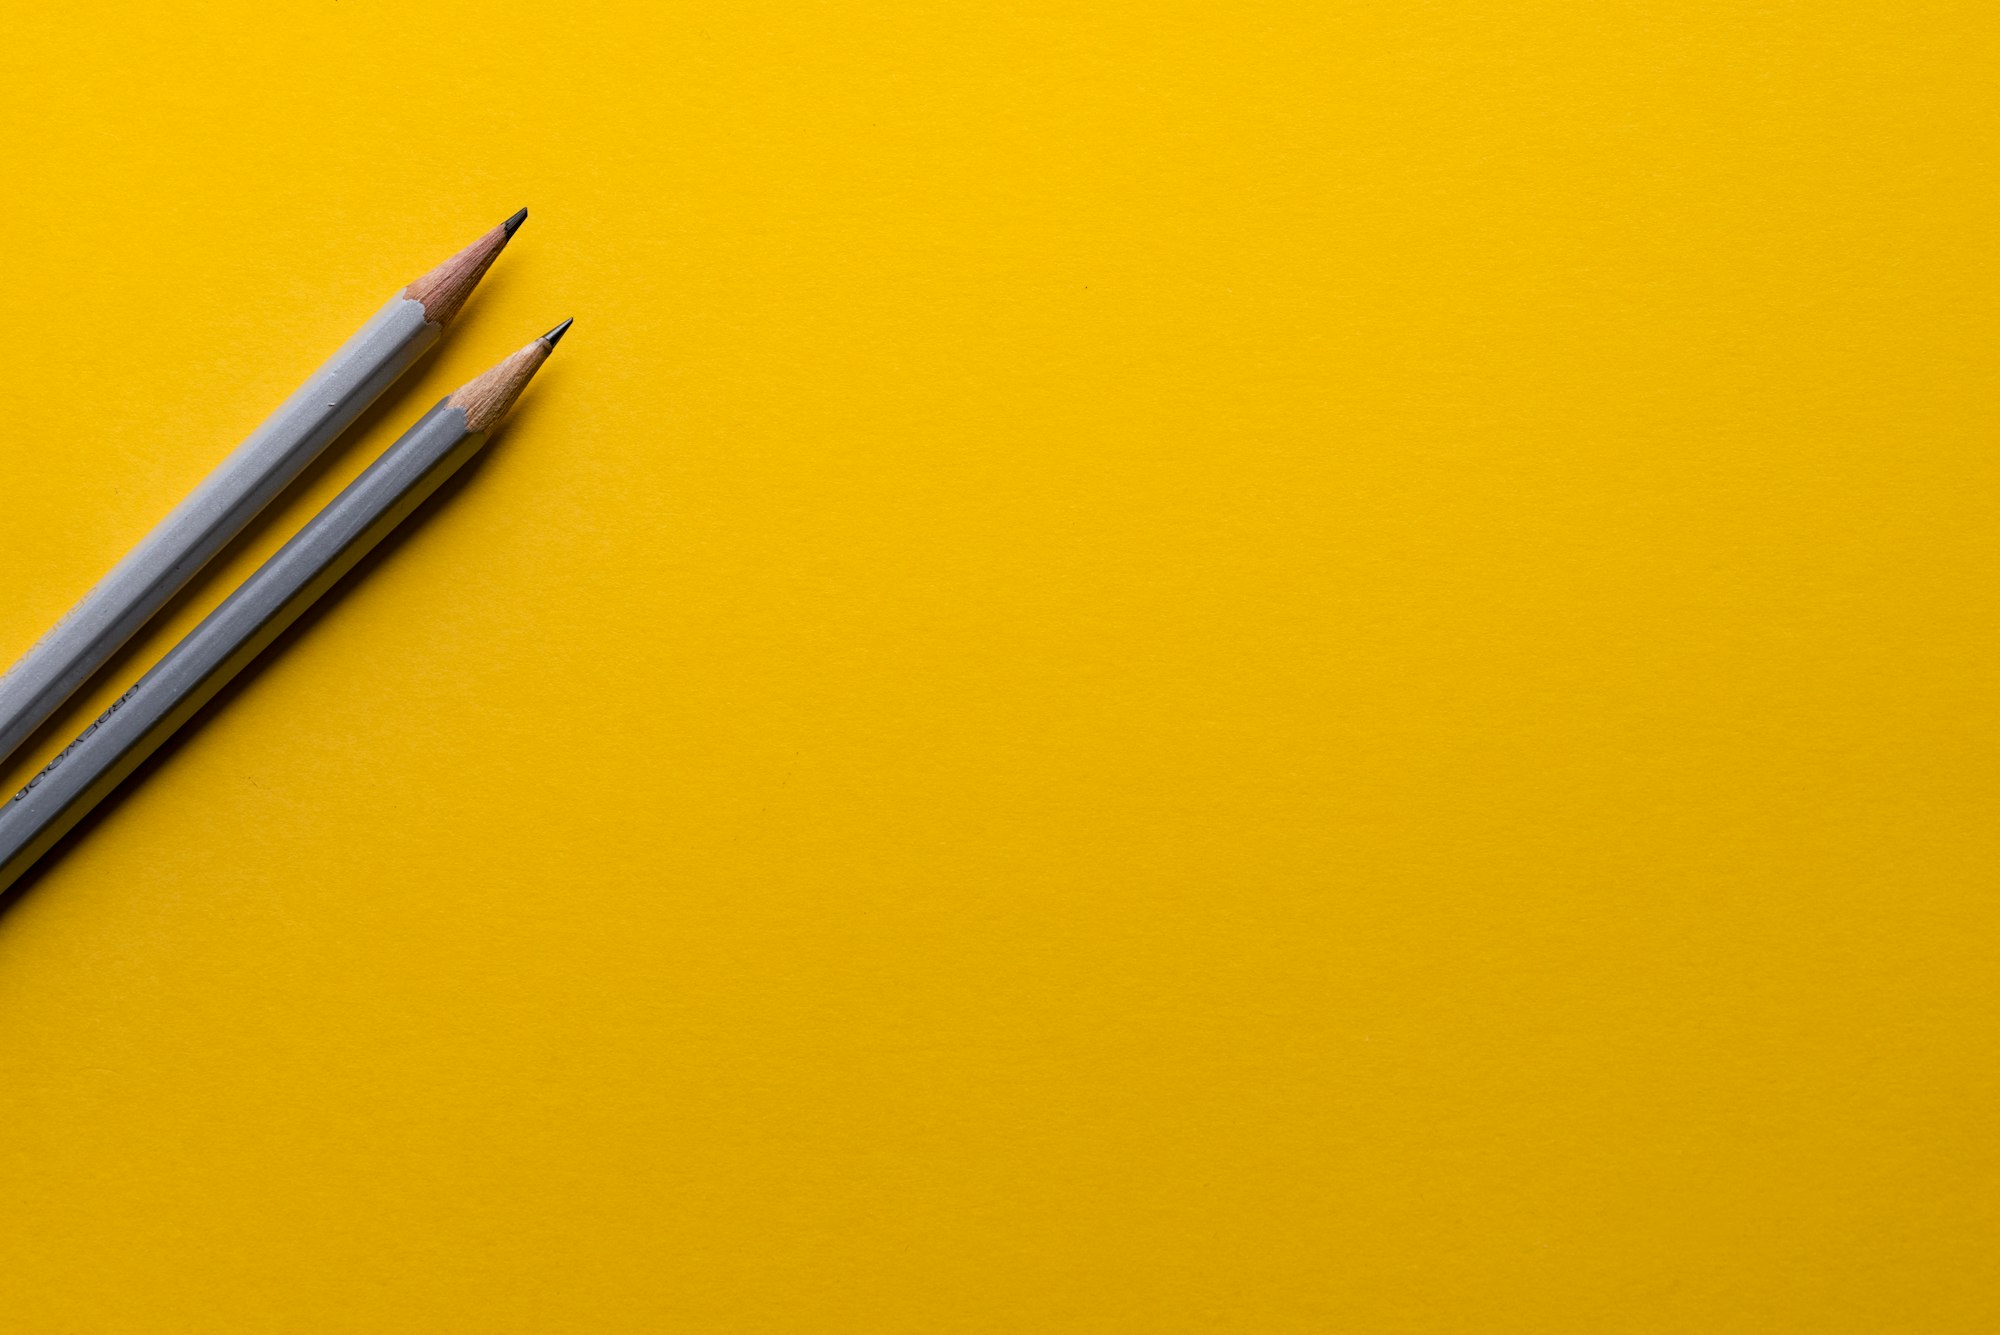 Minimal pencils on yellow